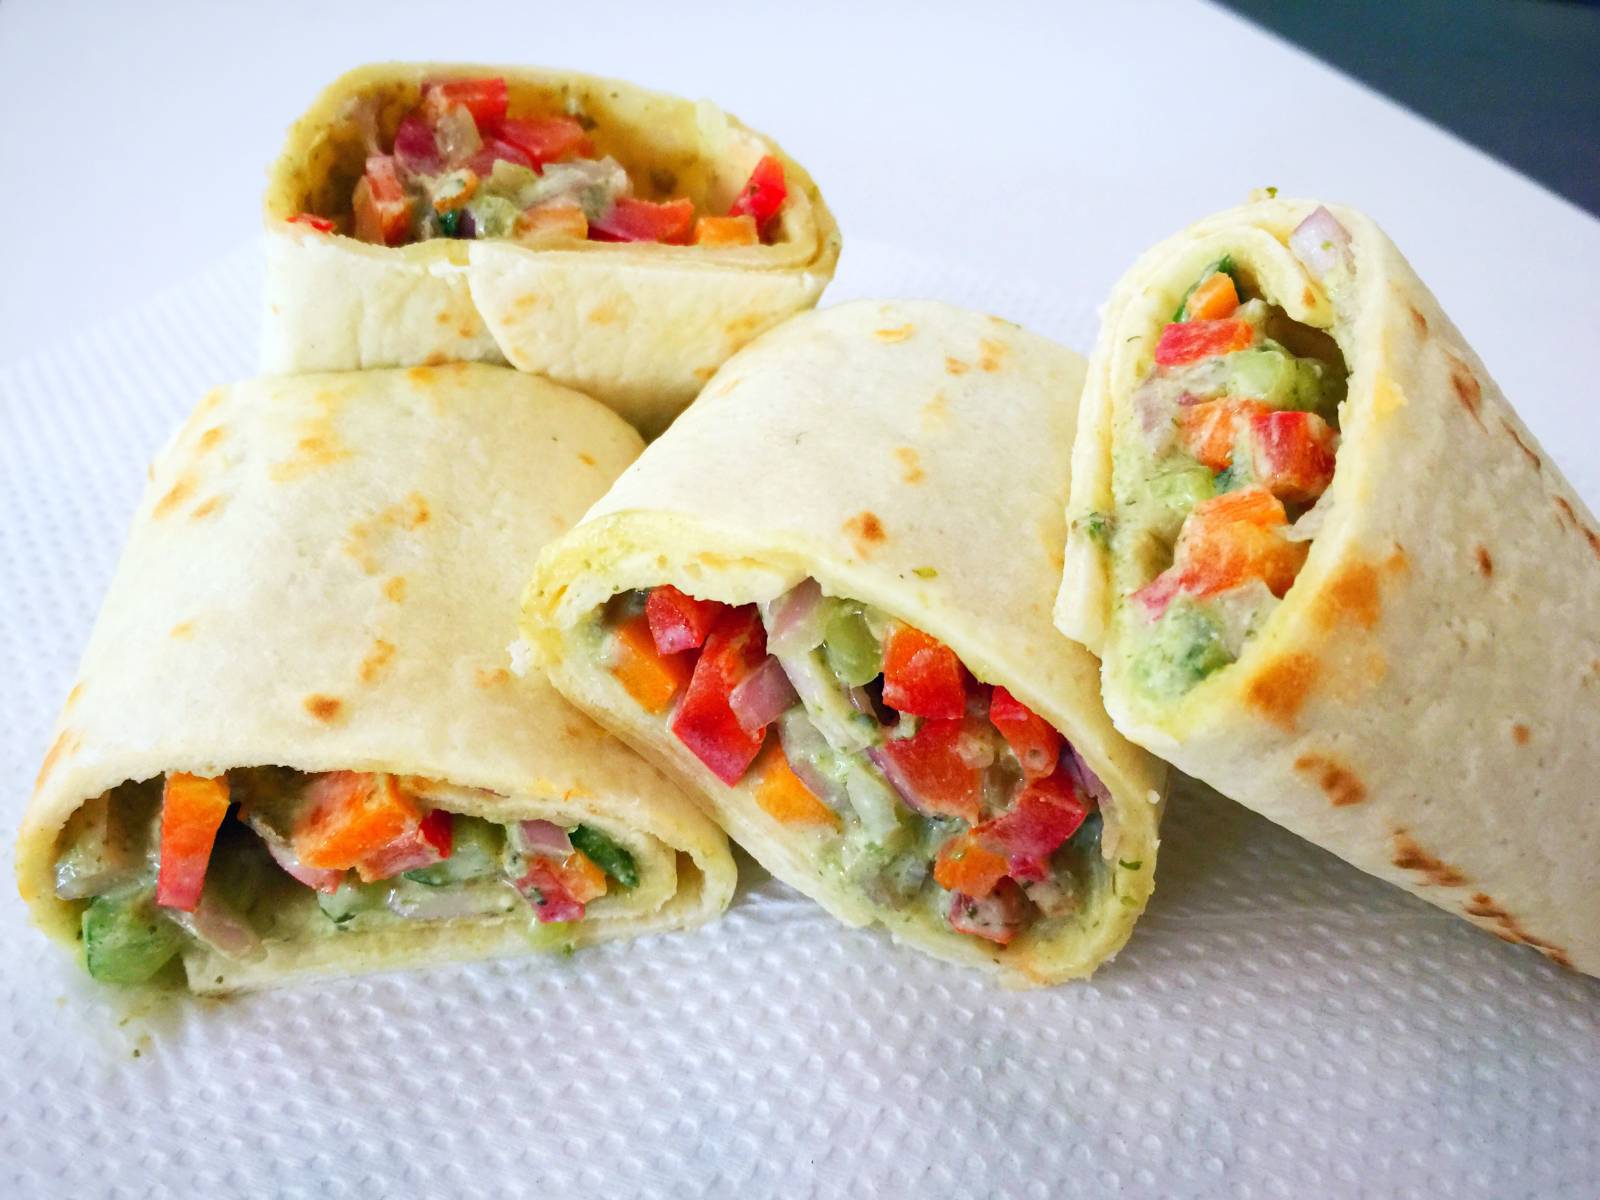 crunchy-vegetables-tortilla-wrap-recipe-by-archana-s-kitchen